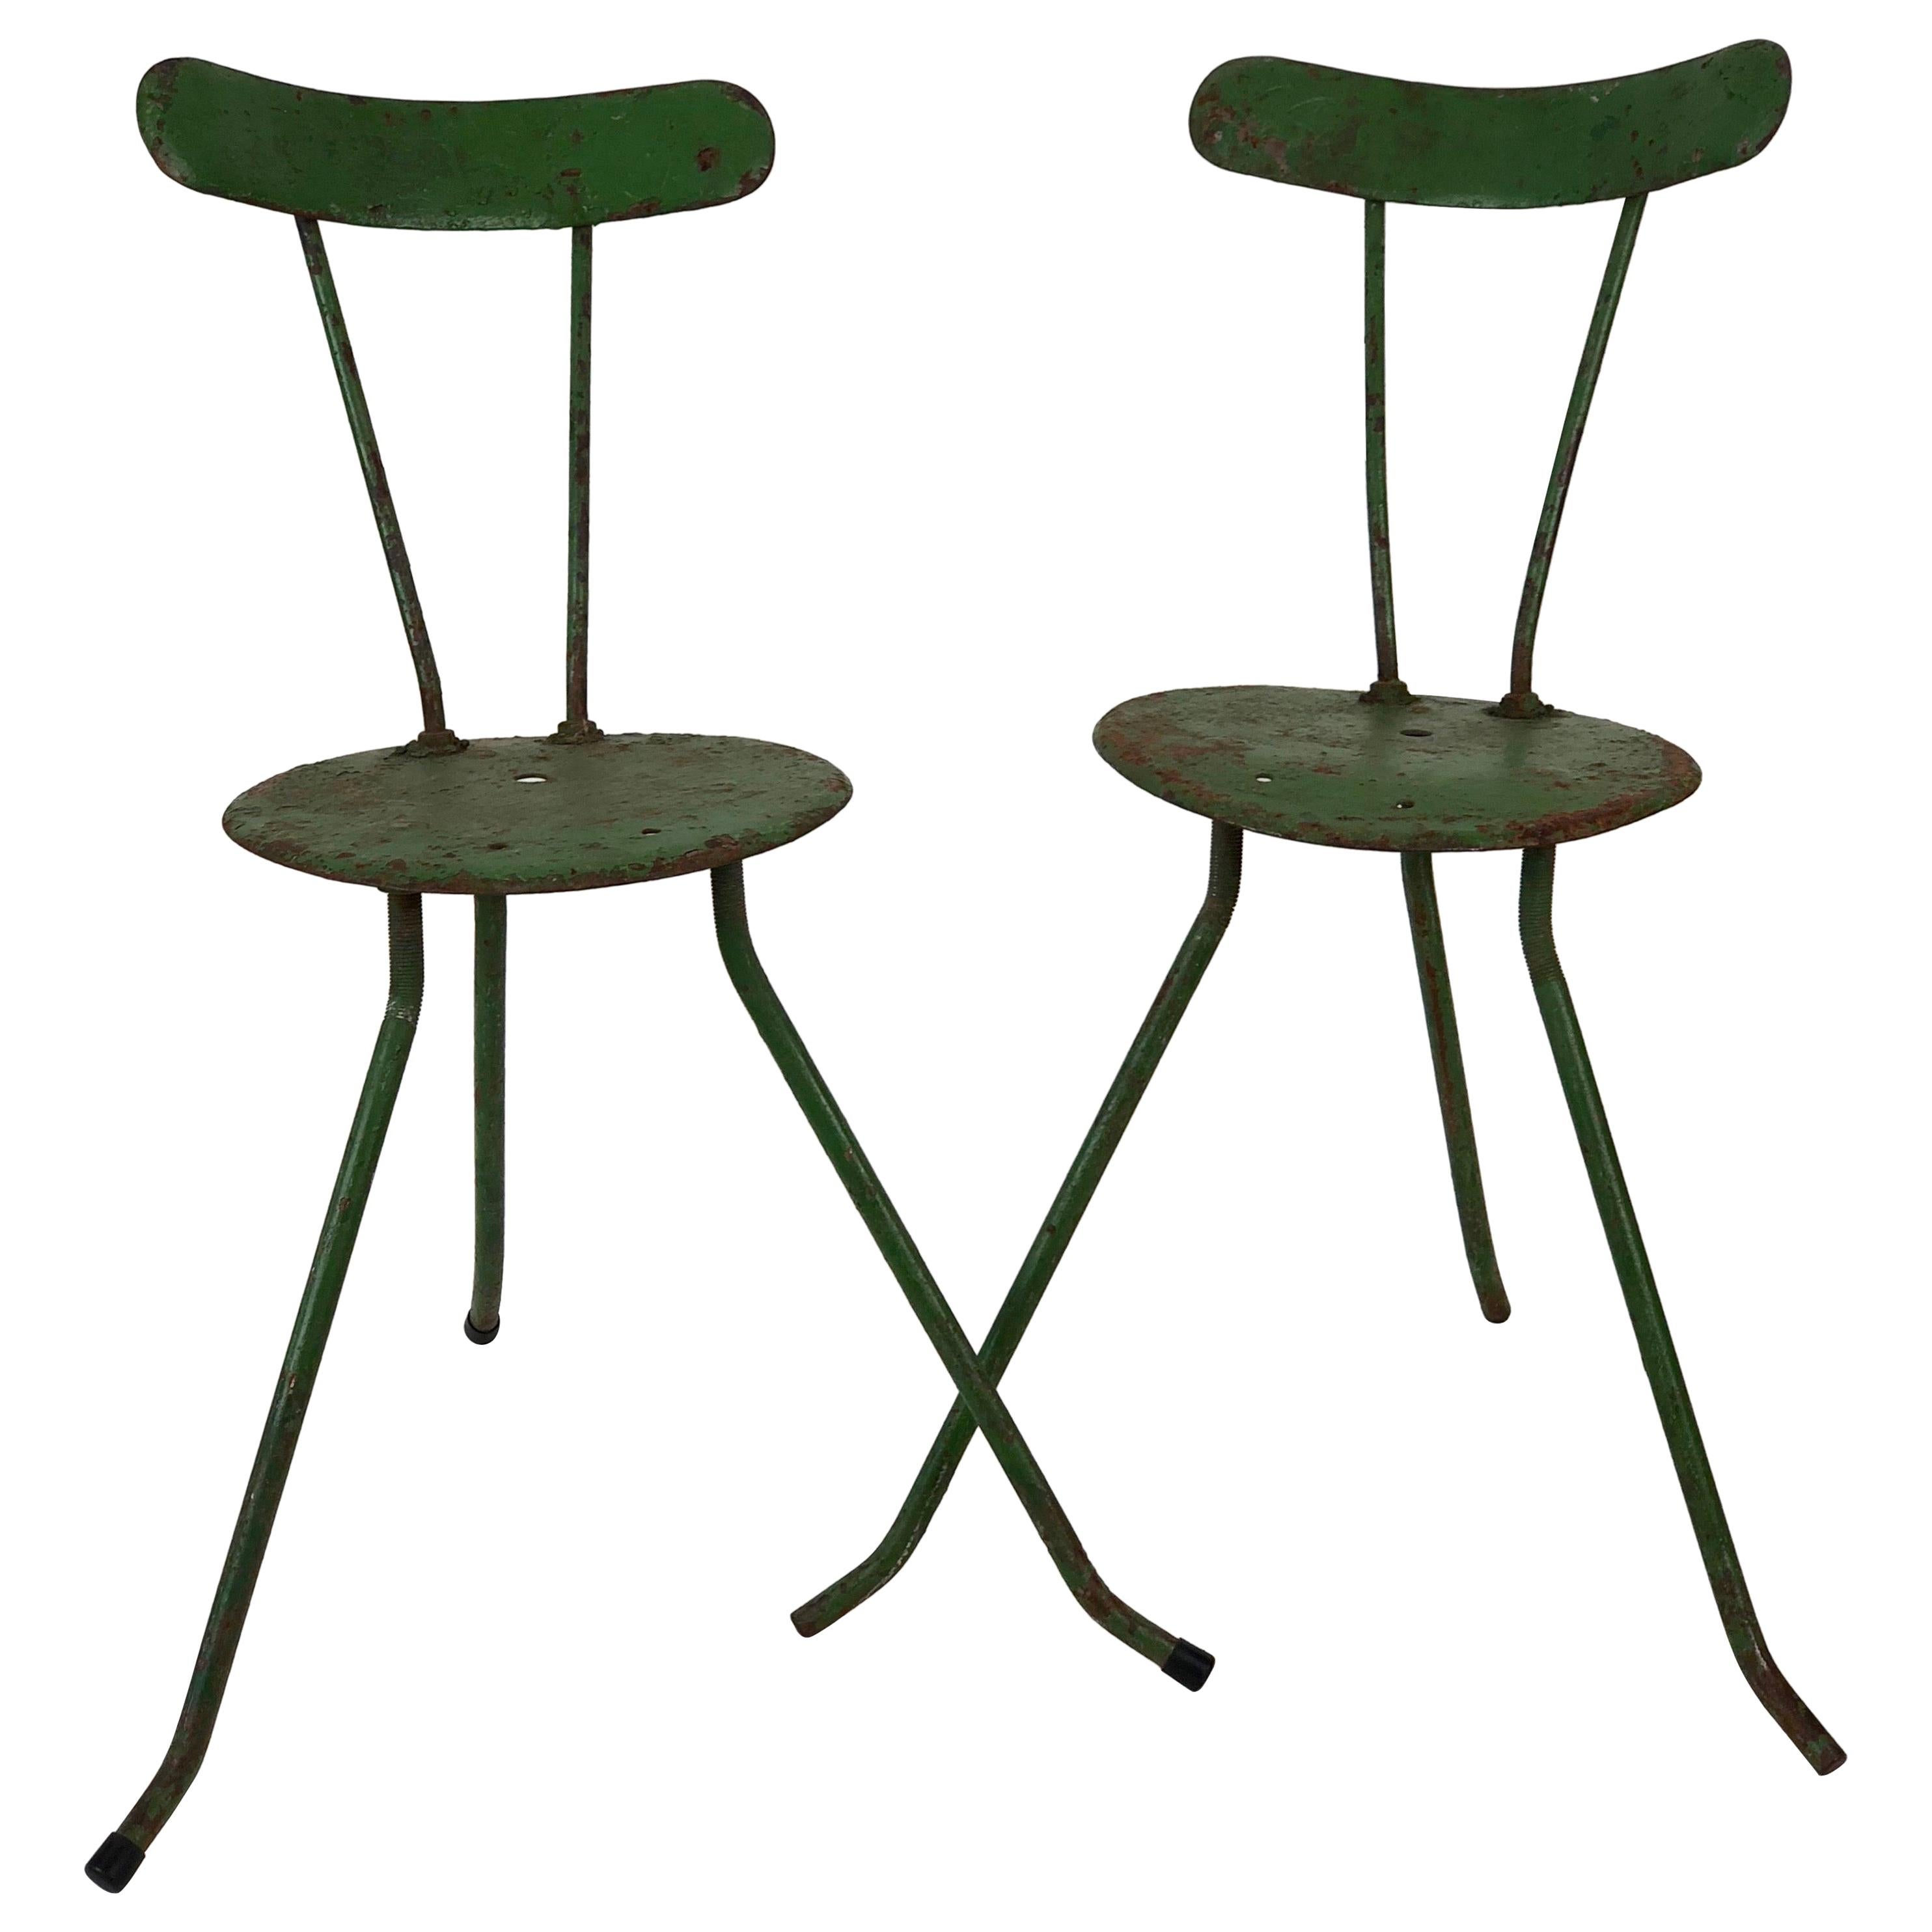 Pair of Handmade Metal Chairs, 1950s, from the Balaton Lake Region, Hungary For Sale